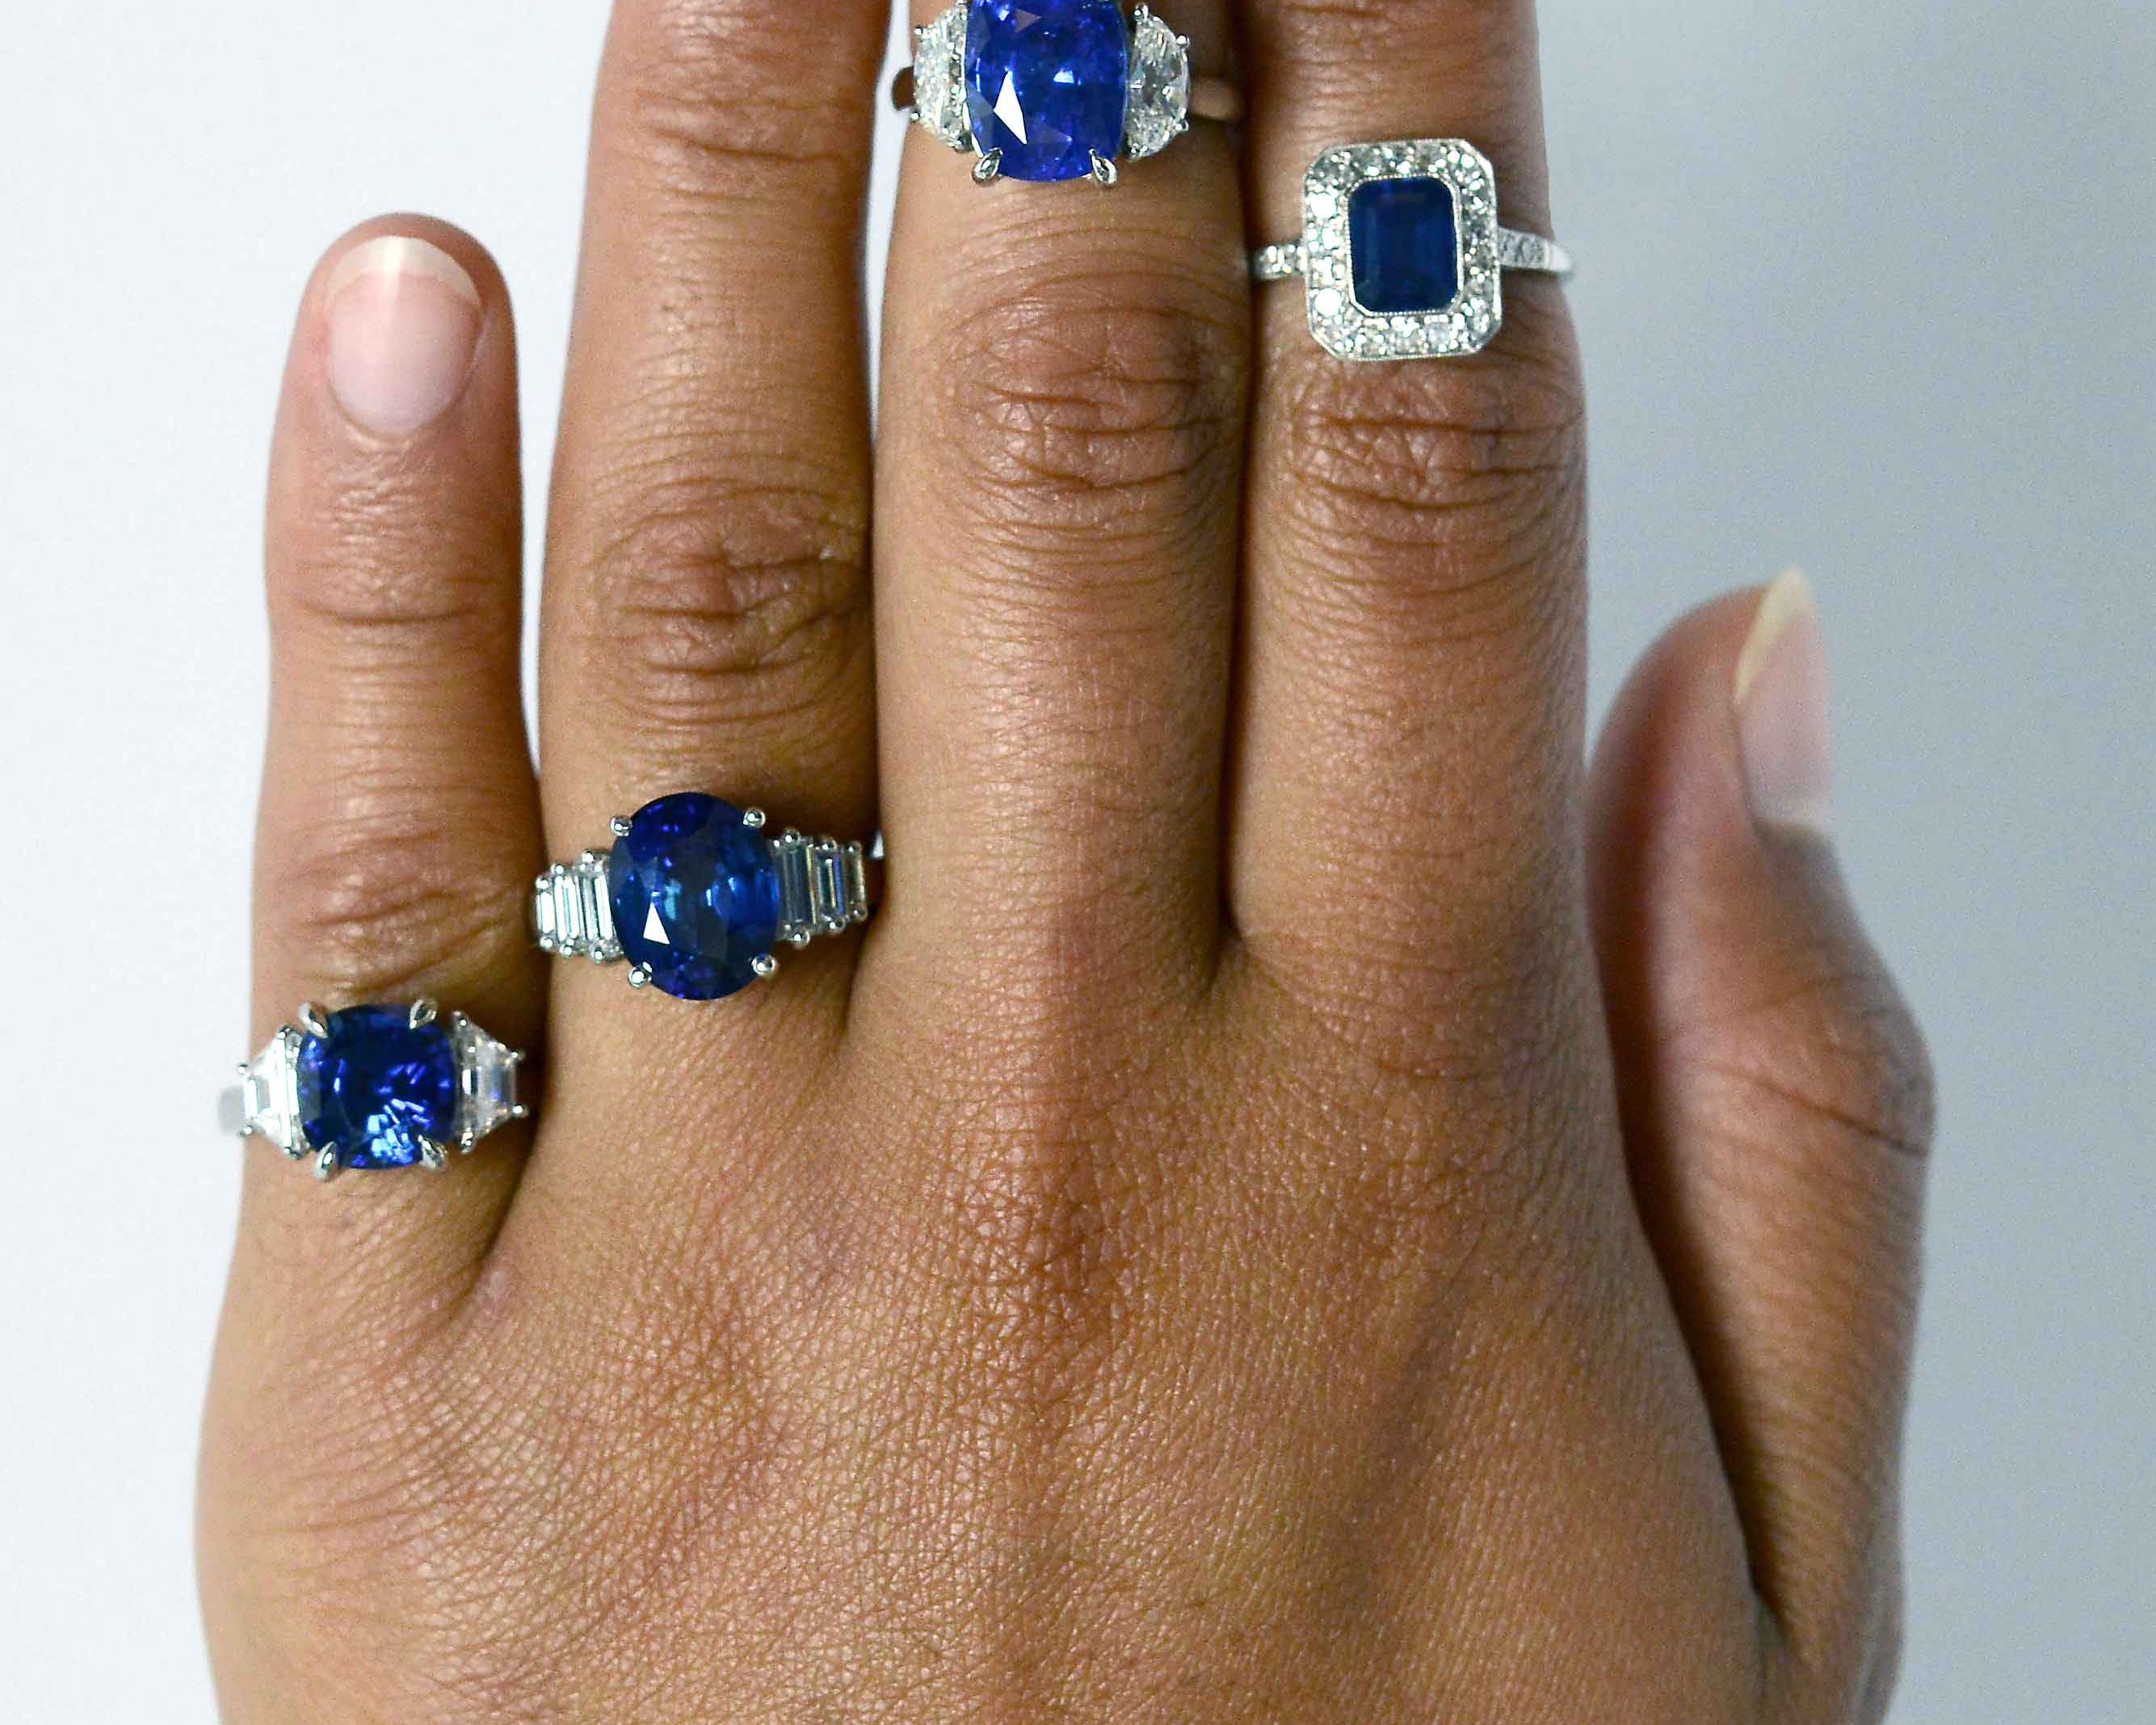 Dark blue sapphire engagement rings with diamonds.